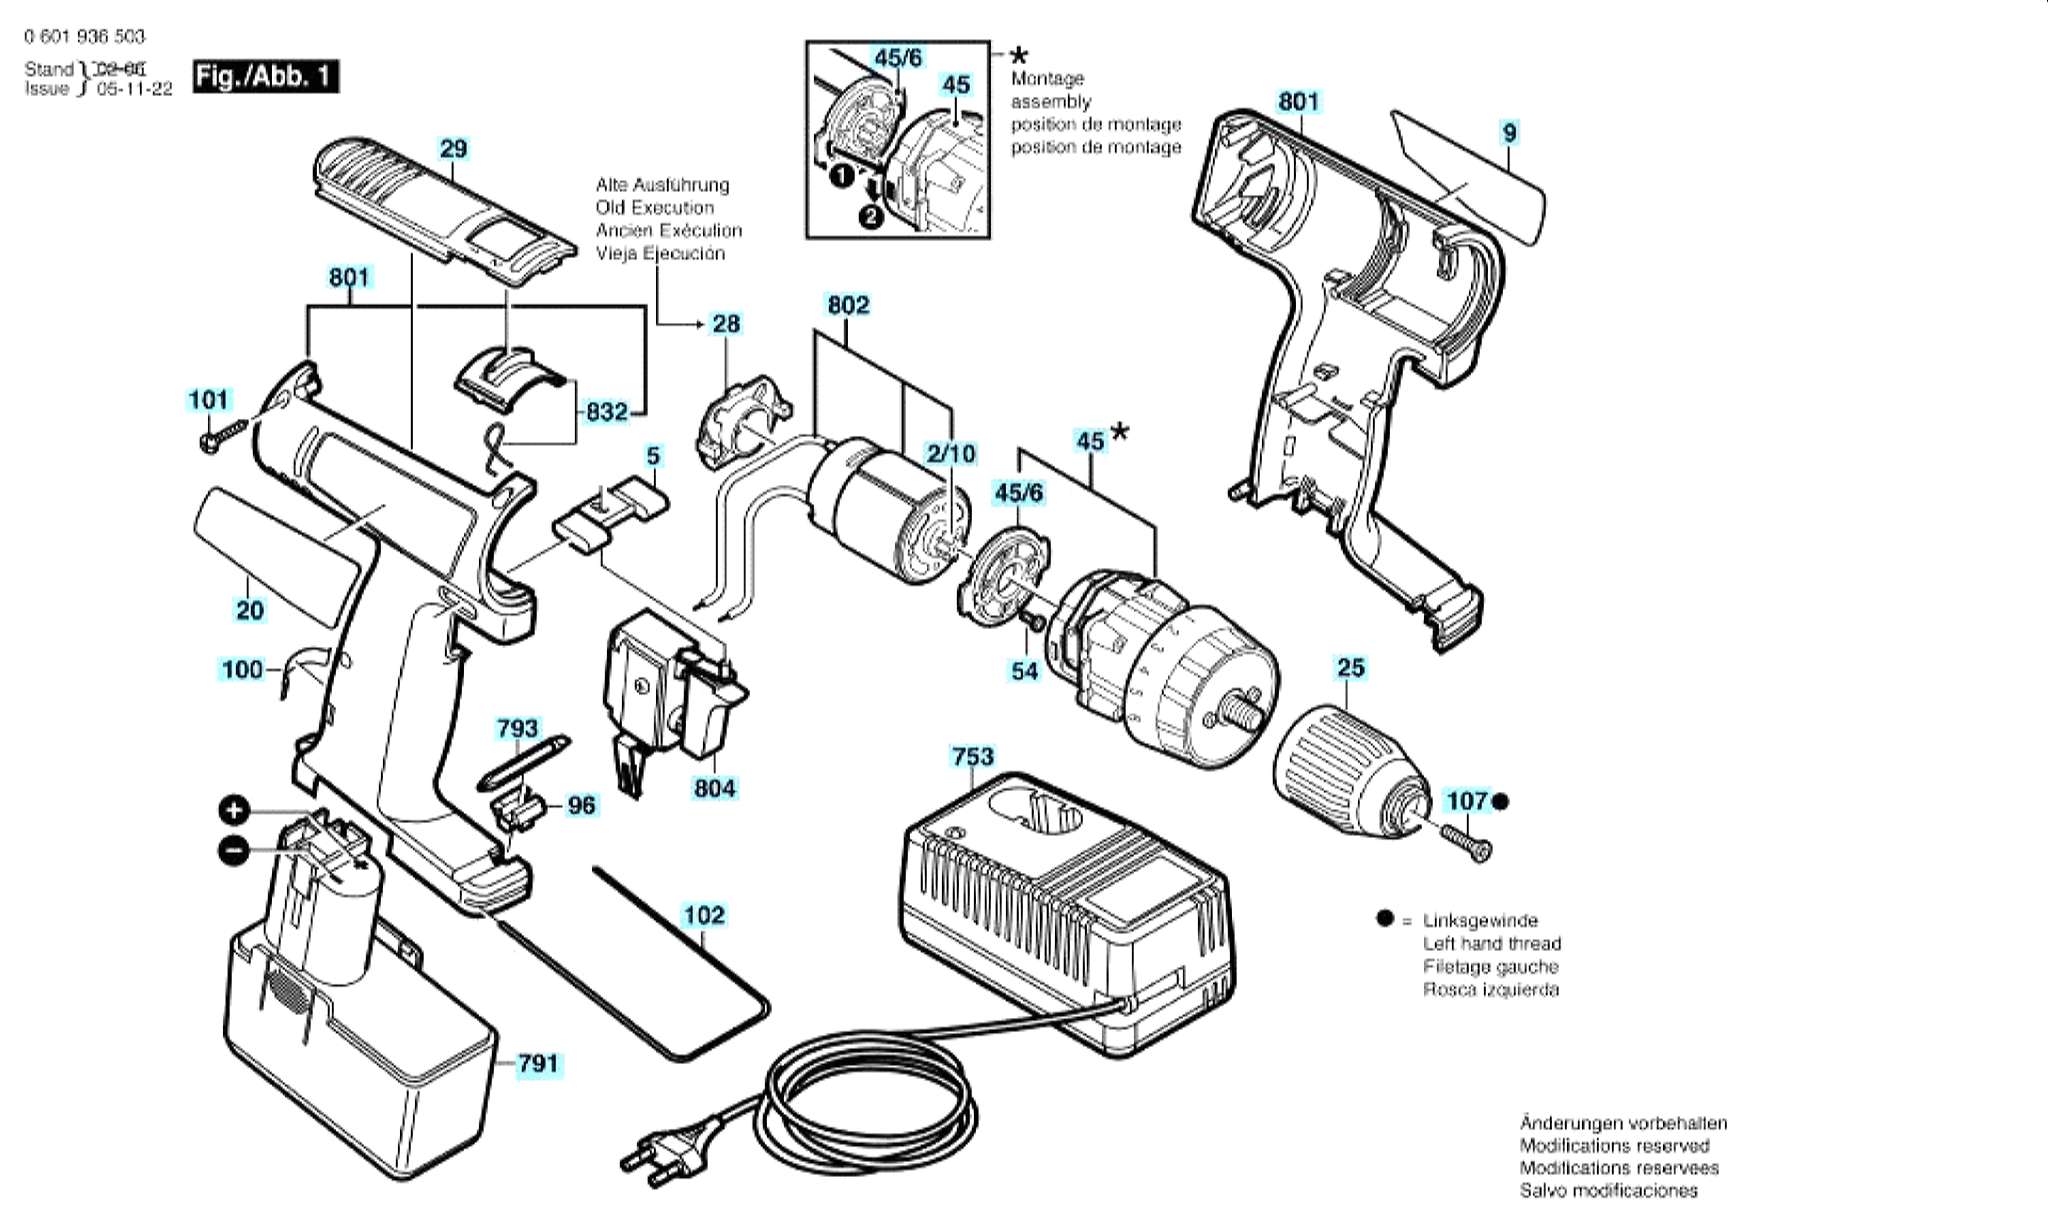 Запчасти, схема и деталировка Bosch GSR 12 VES-2 (ТИП 0601936503)